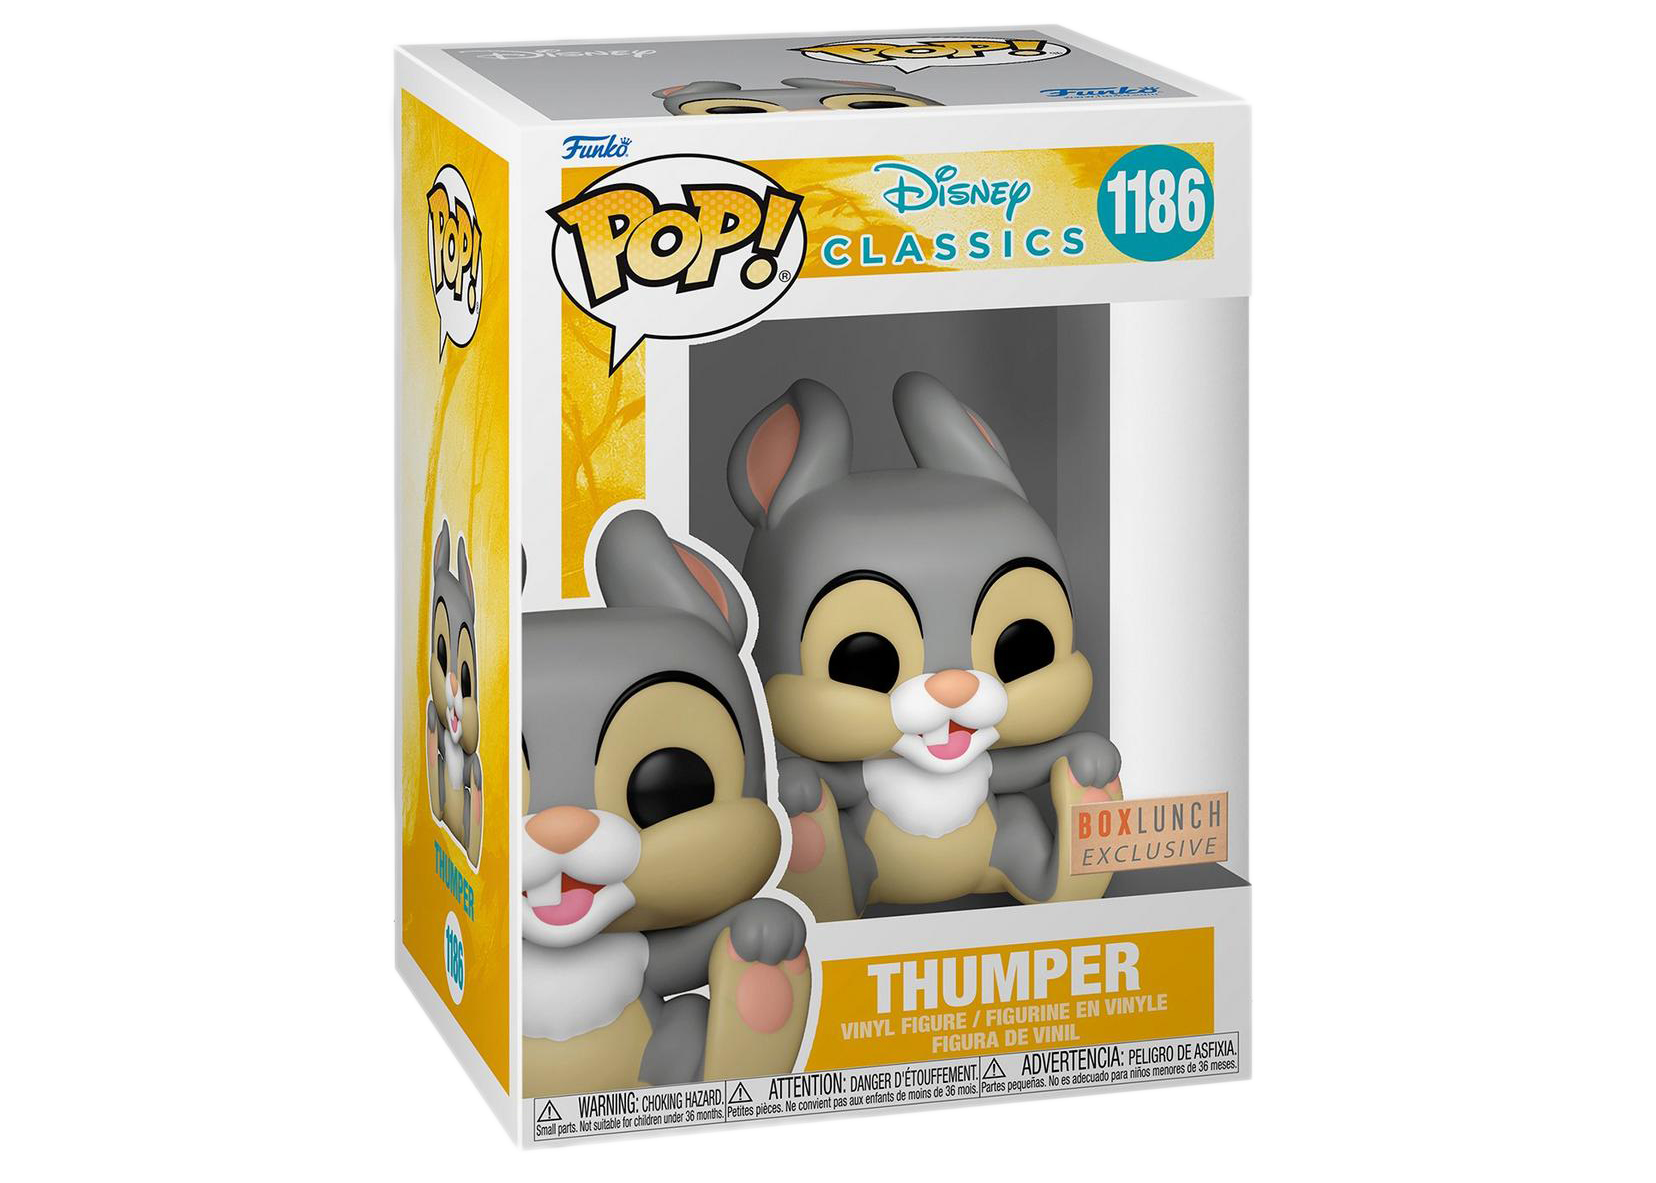 Funko Pop! Disney Classics Thumper BoxLunch Exclusive Figure #1186 